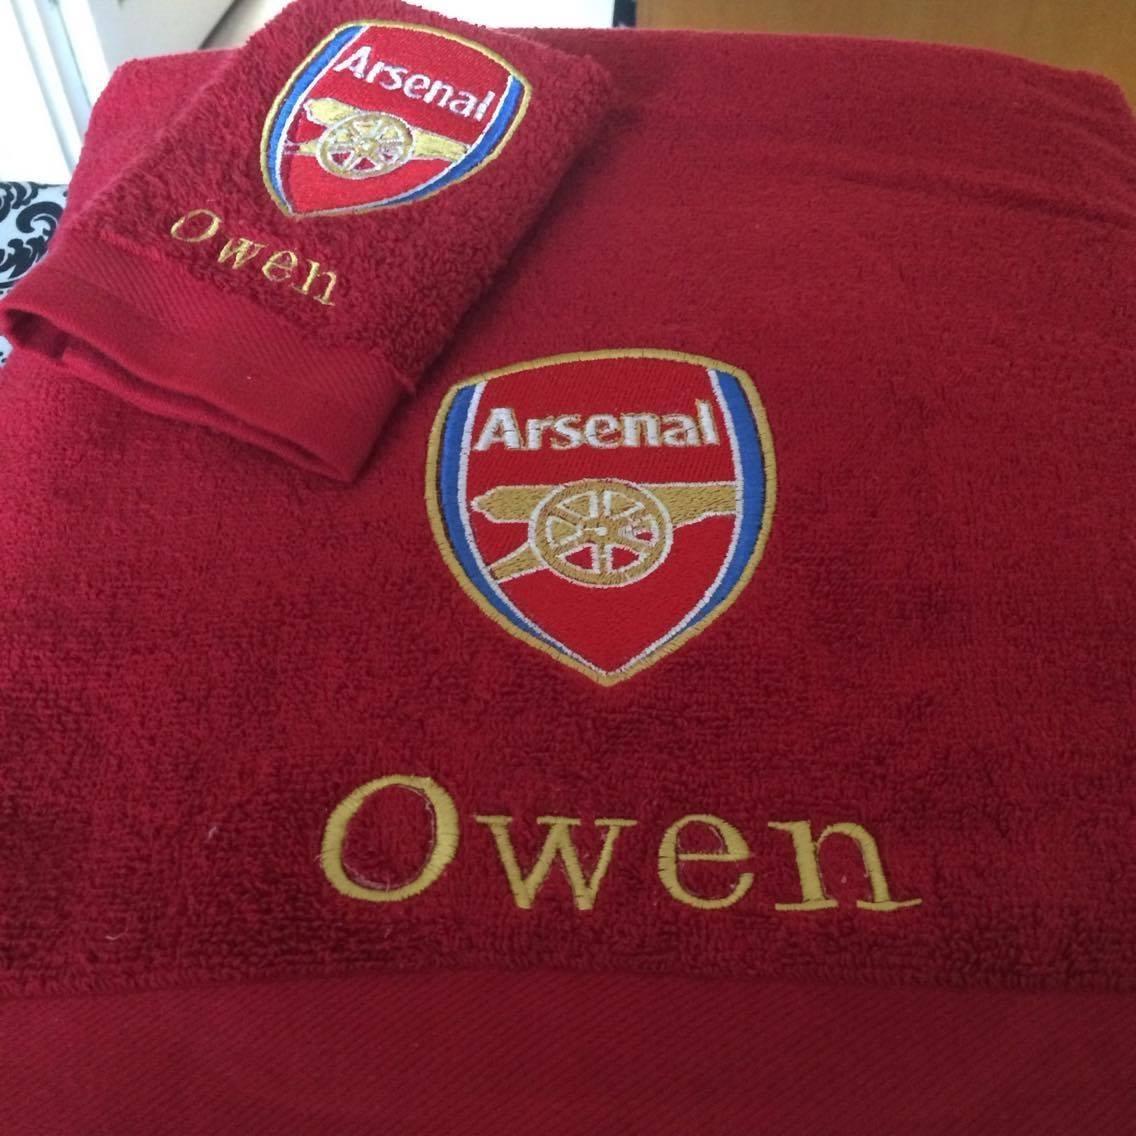 Arsenal Football Club logo machine embroidery design